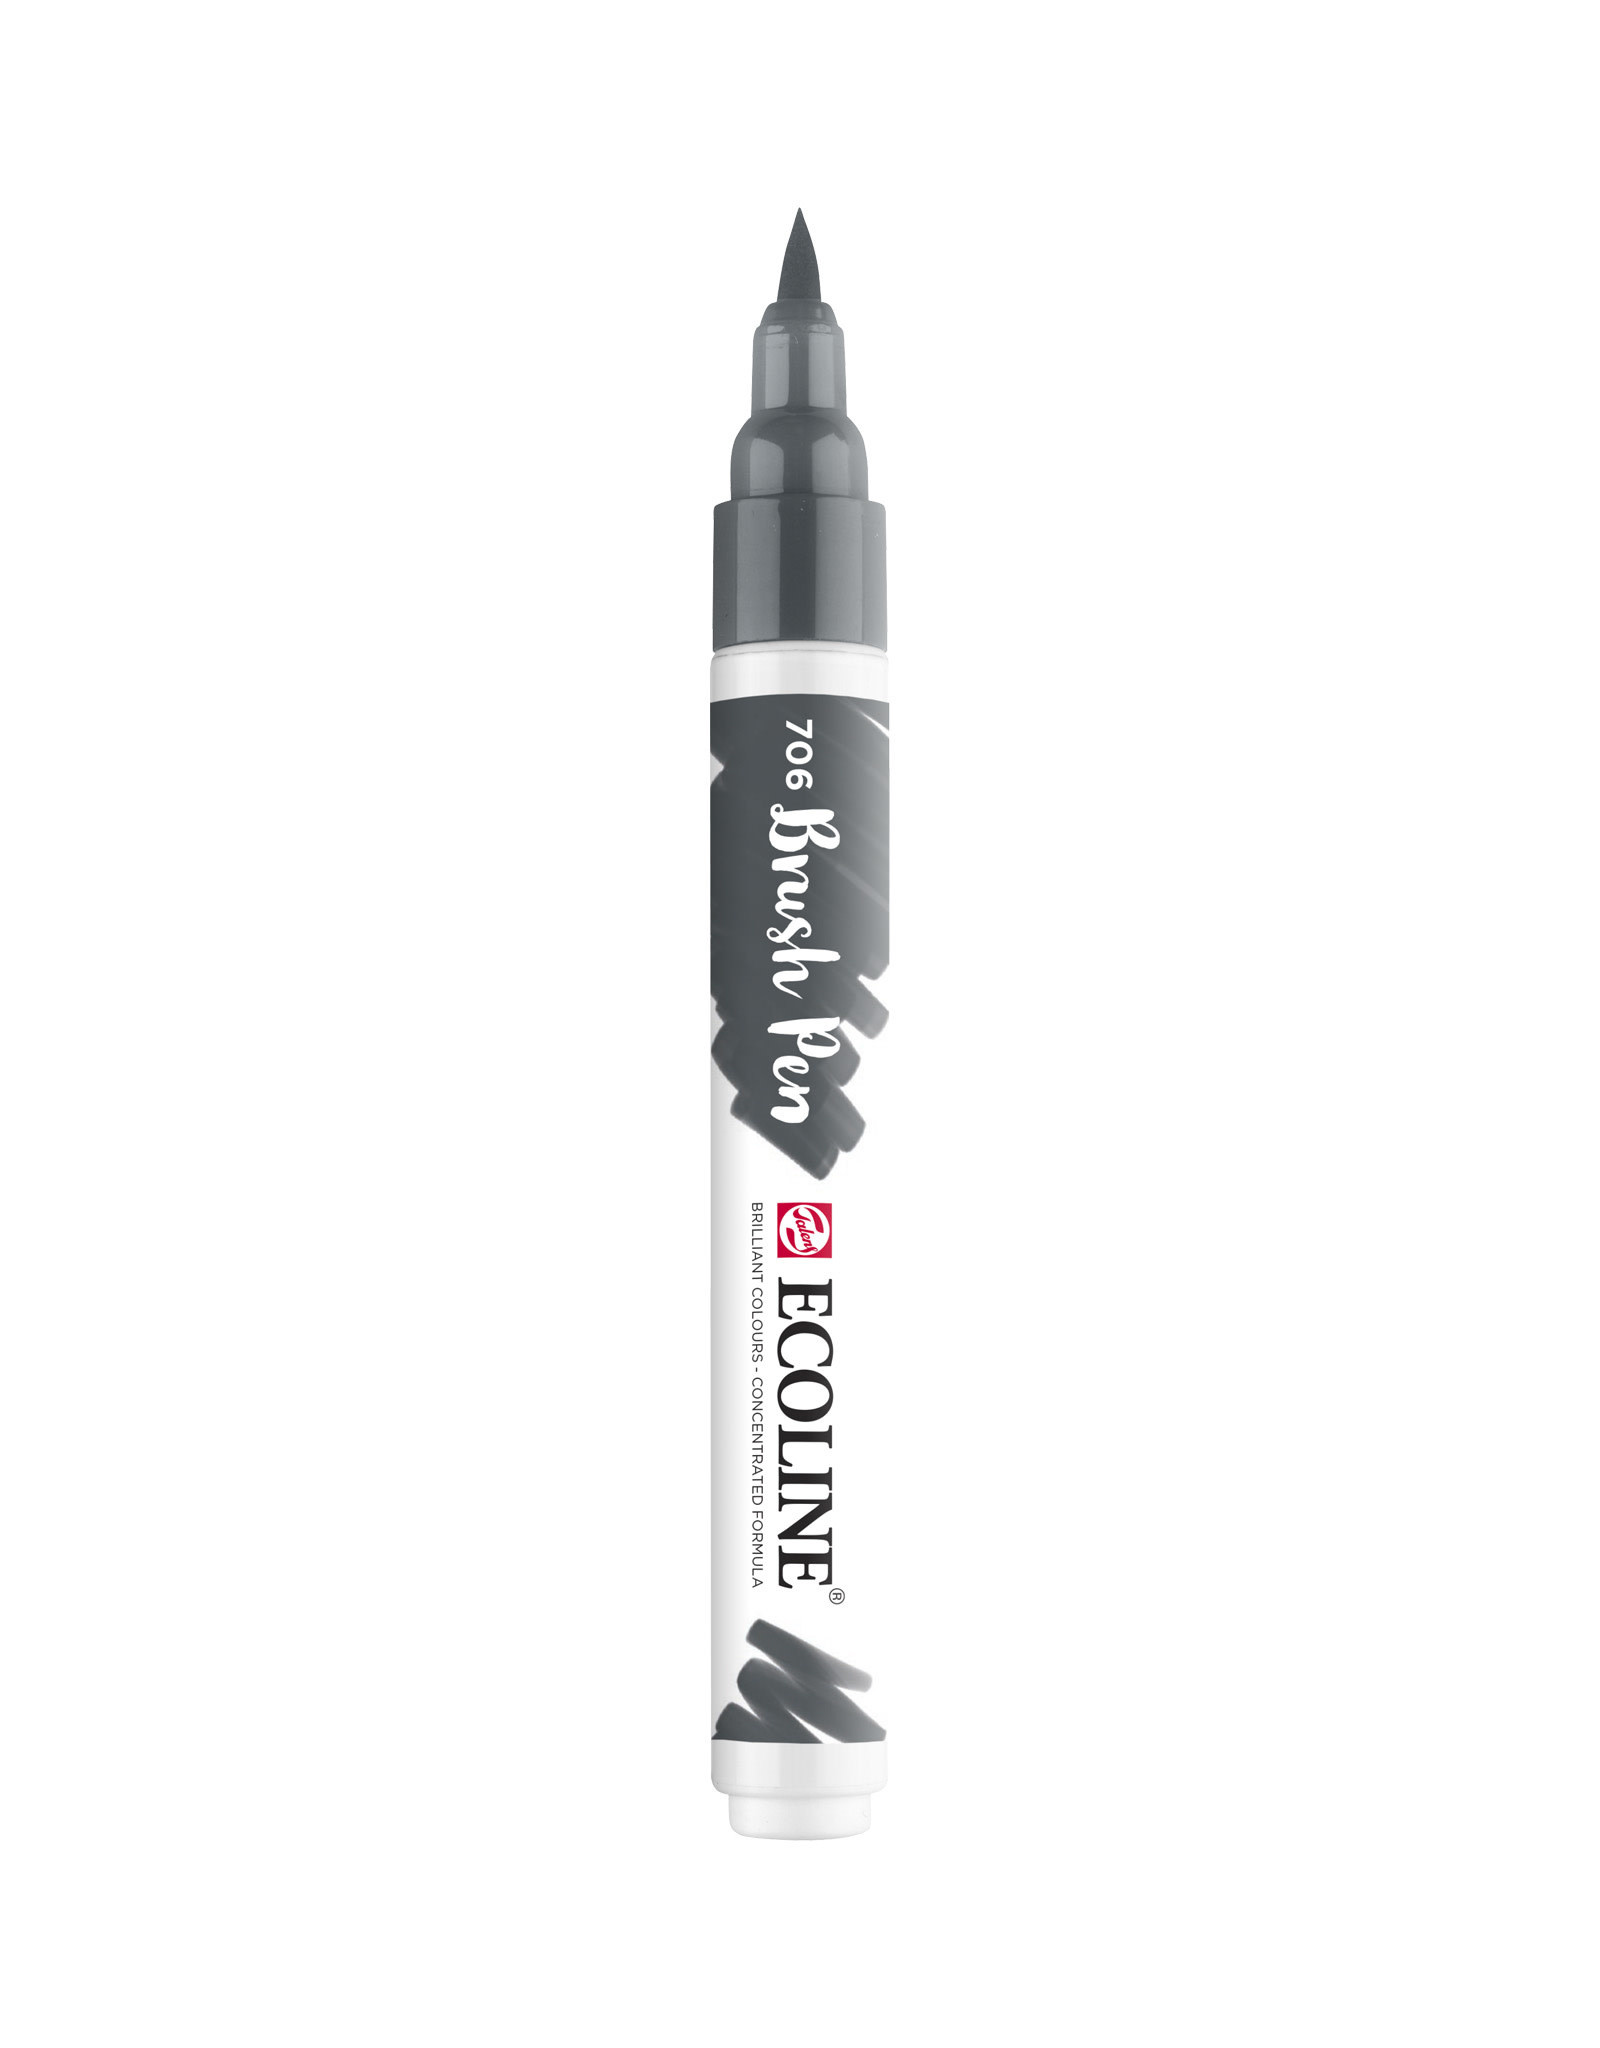 Royal Talens Ecoline Watercolour Brush Pen, Deep Grey